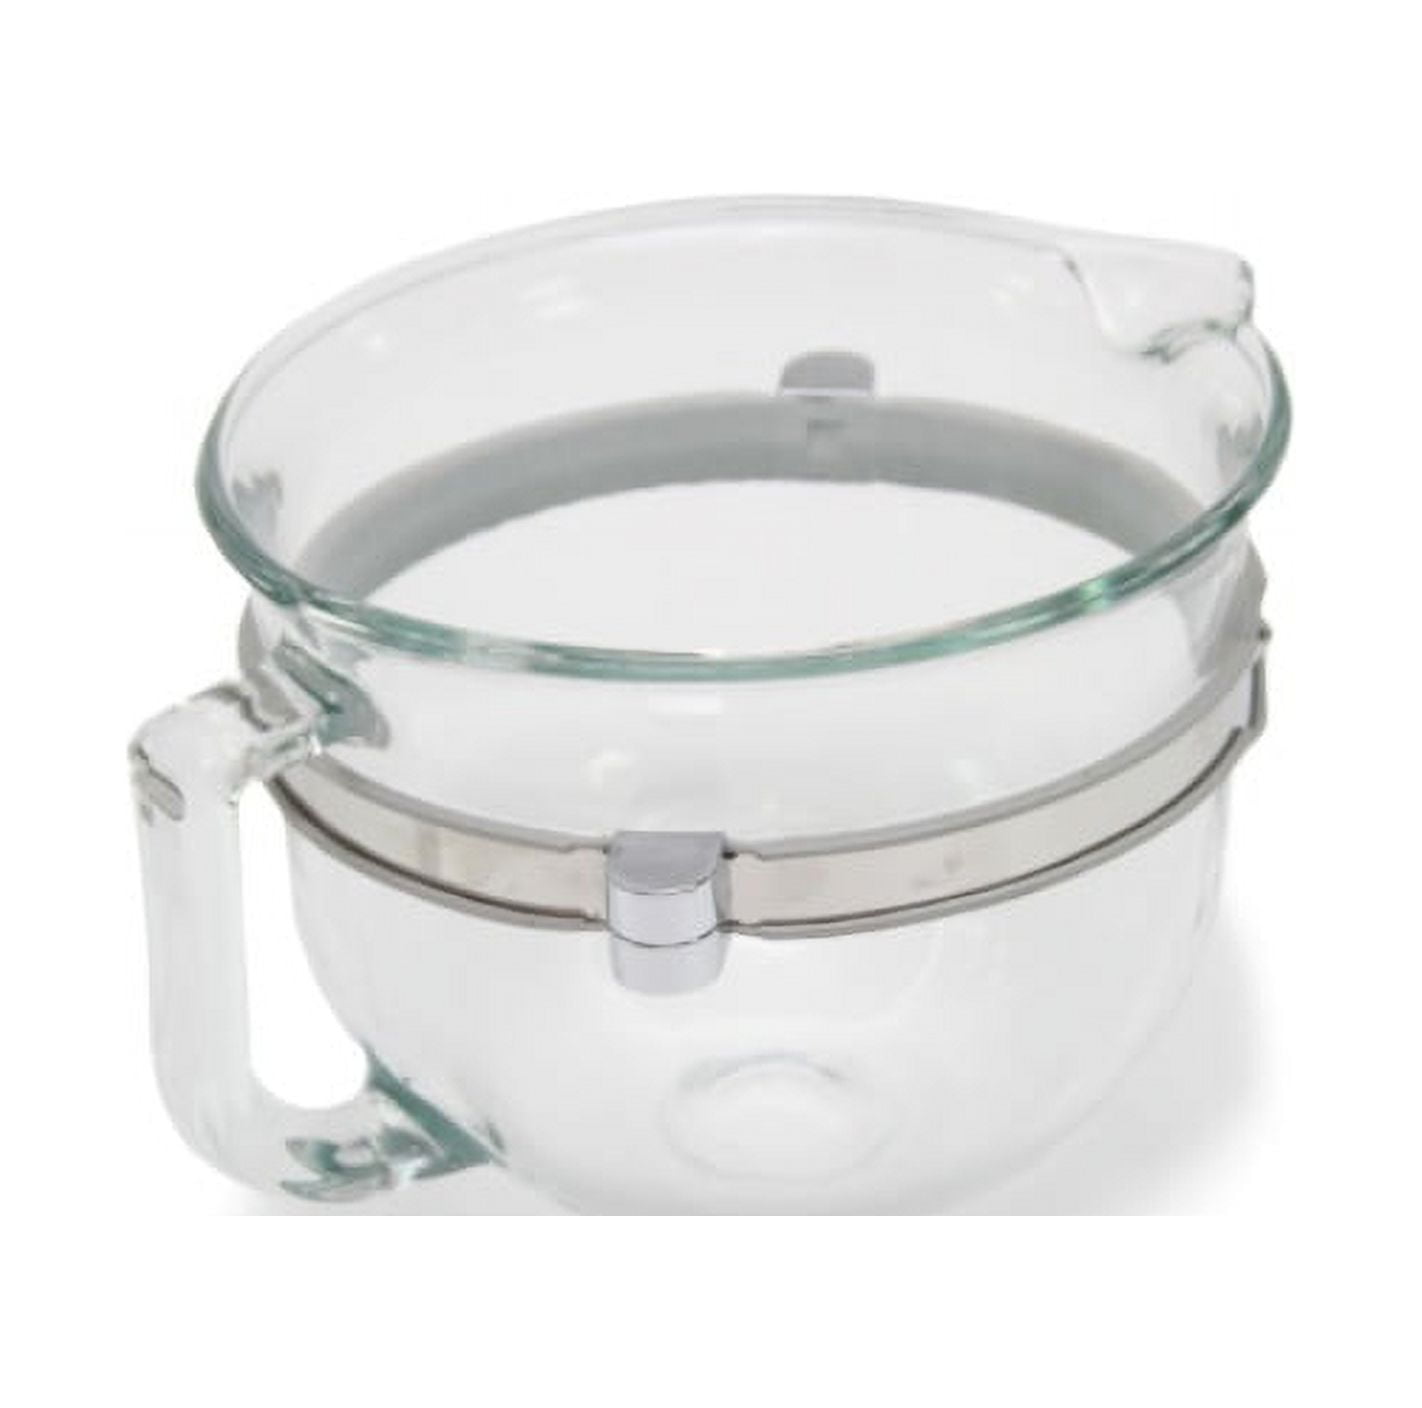 KitchenAid C/O 6qt Stand Mixer w/Glass Bowl or Spiralizer